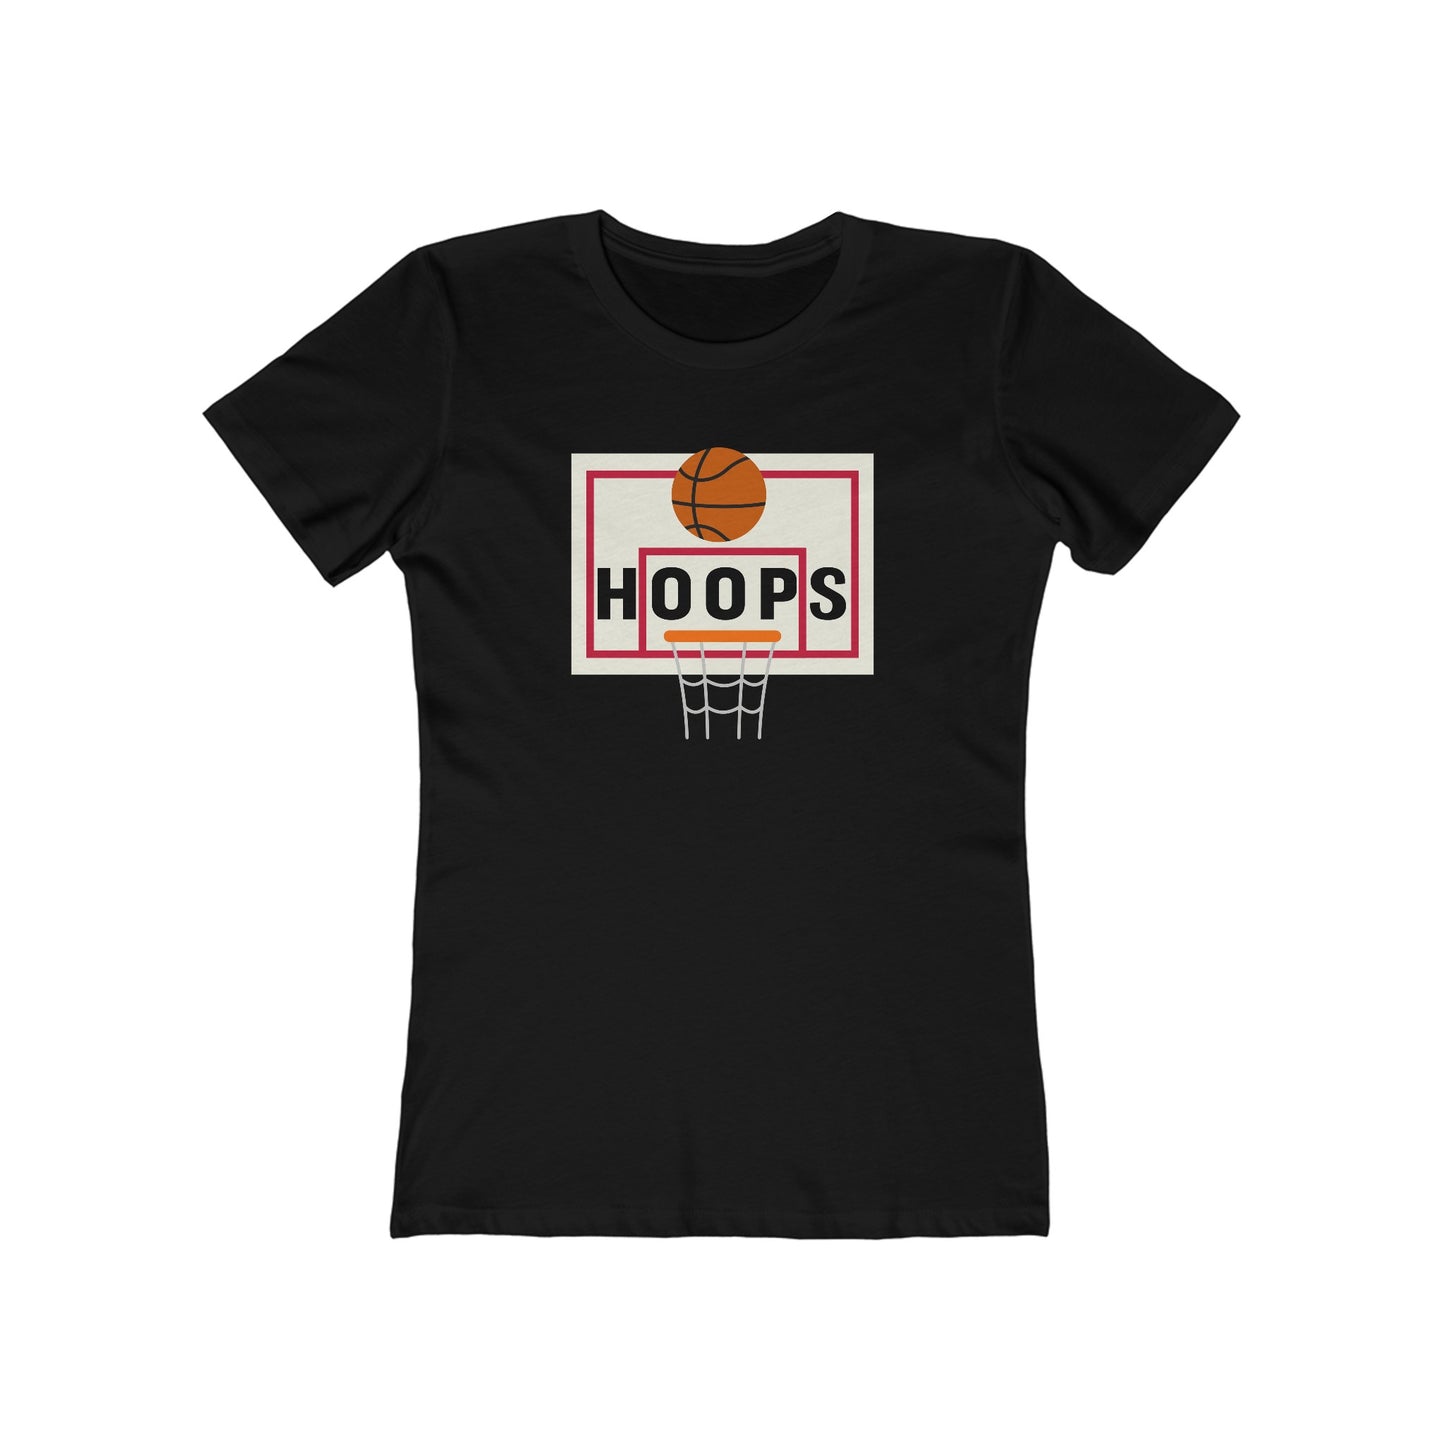 Hoops - Women's T-Shirt